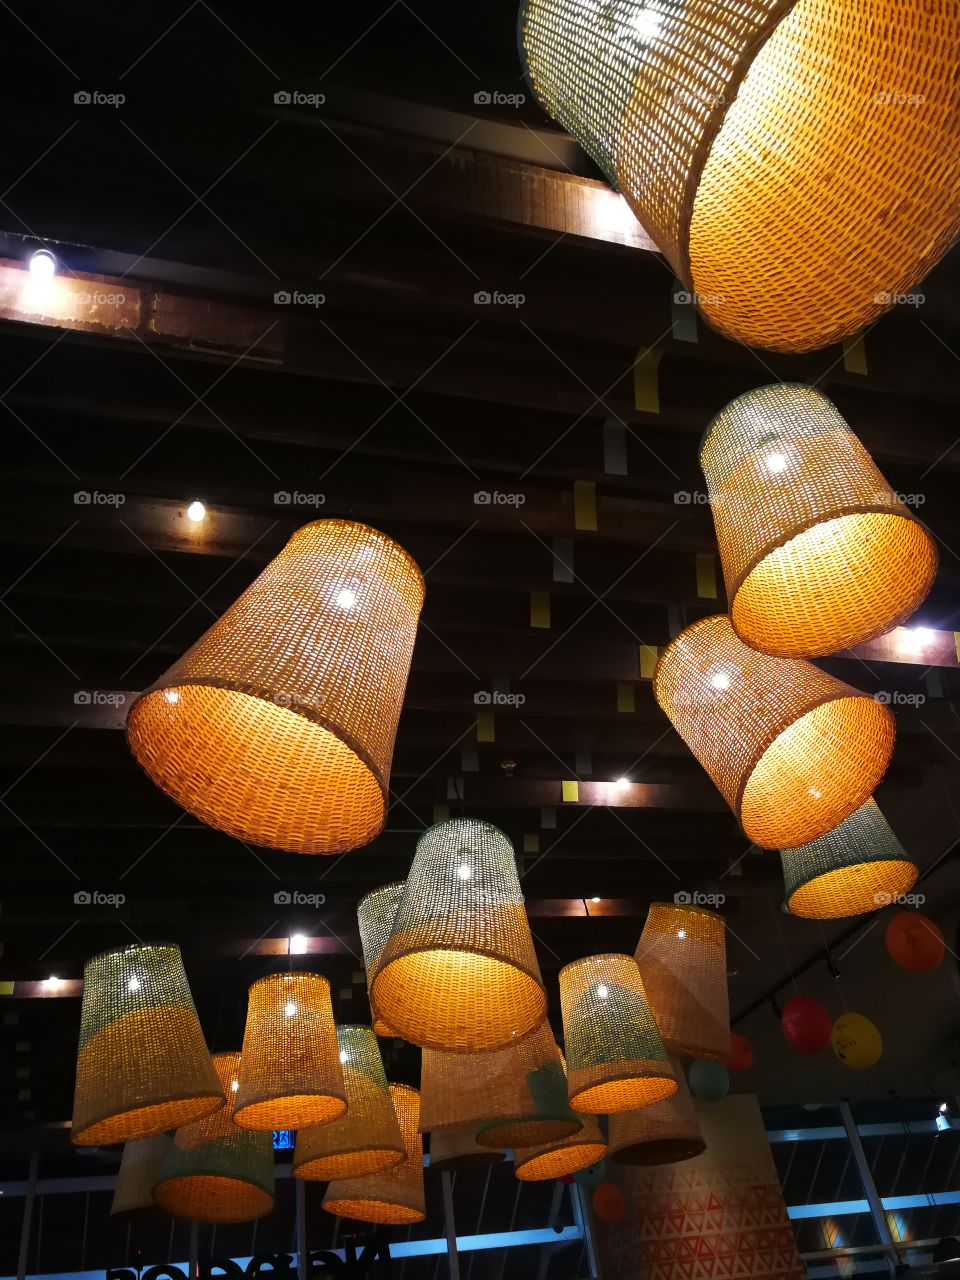 A restaurant lighting assembly